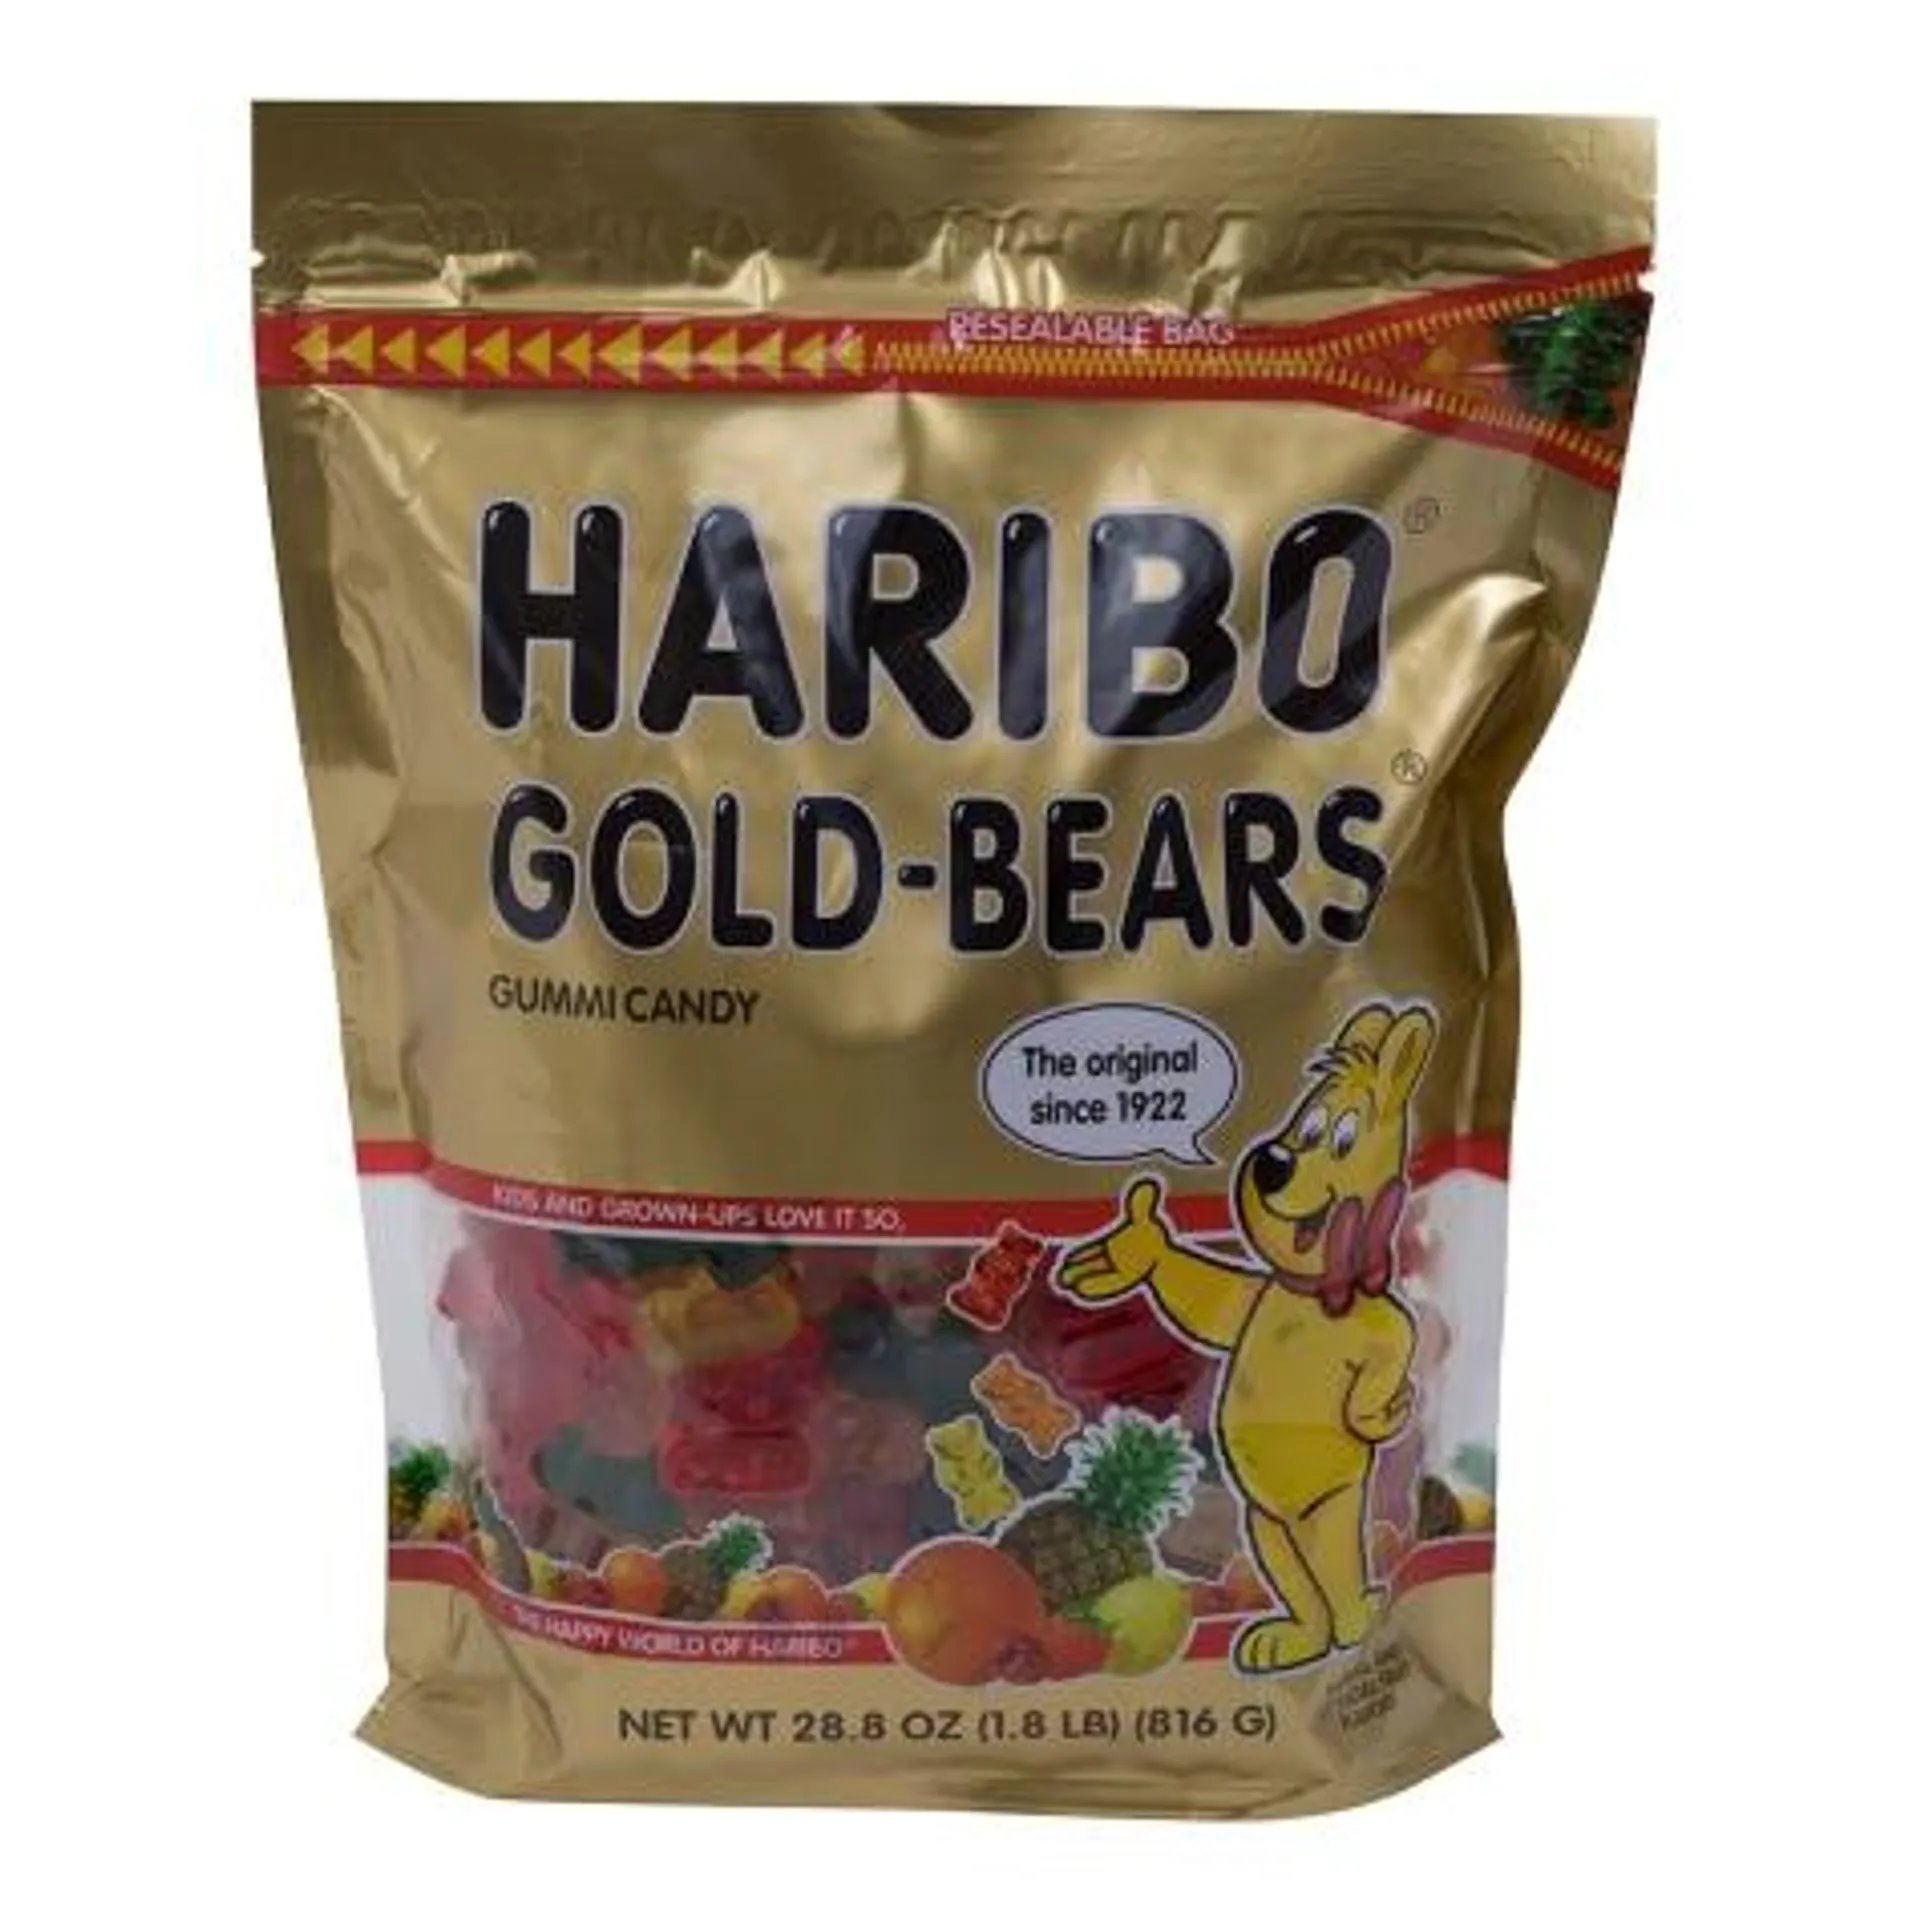 Haribo Gold-Bears Gummi Candy, 28.8 oz